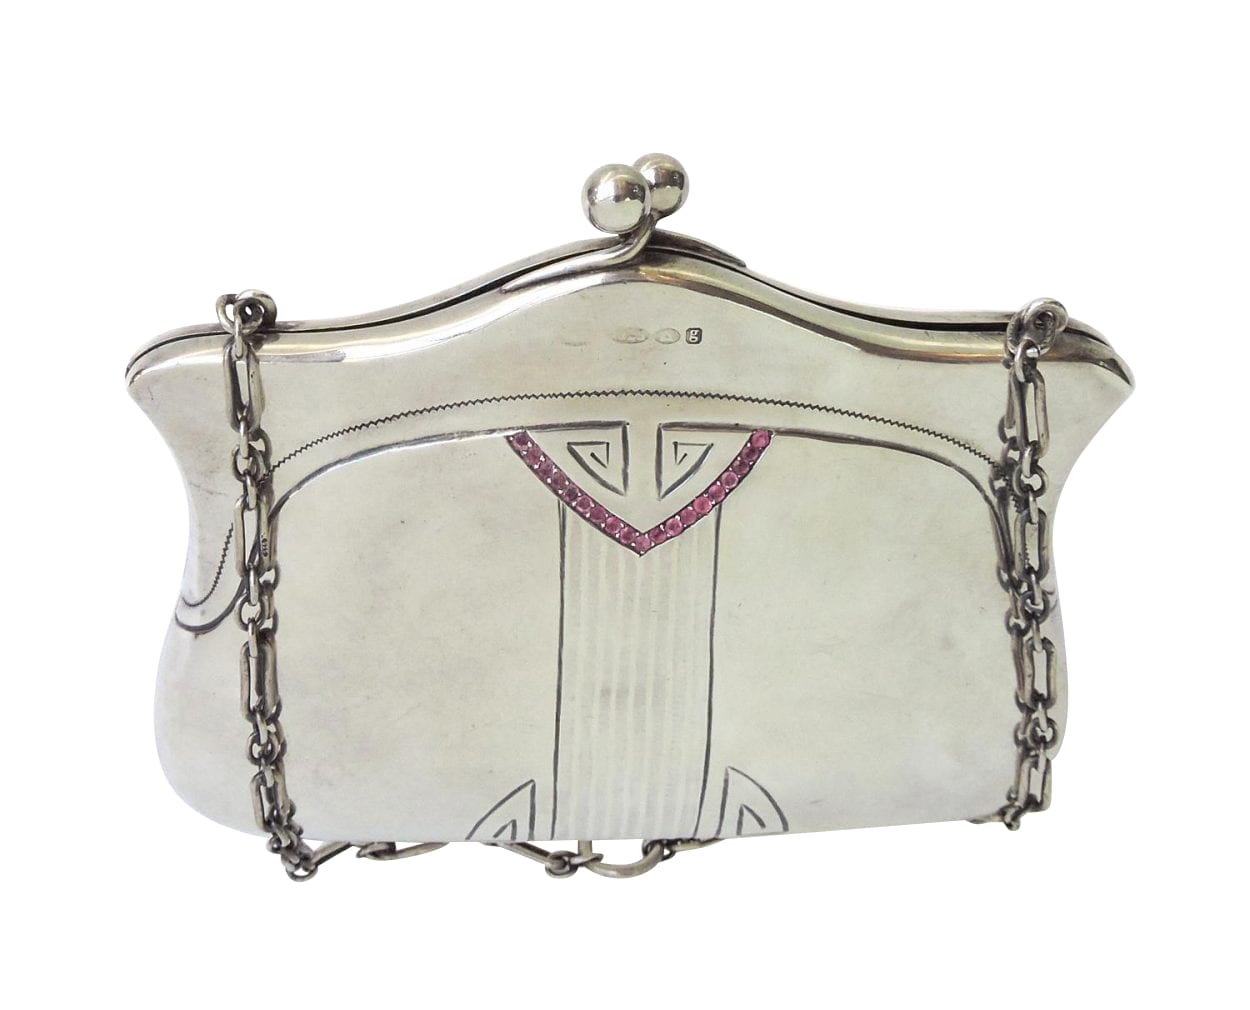 Buy 92.5 Silver Antique Embossed Vintage Ethnic Ladies Purse 340VB85 Online  from Vaibhav Jewellers